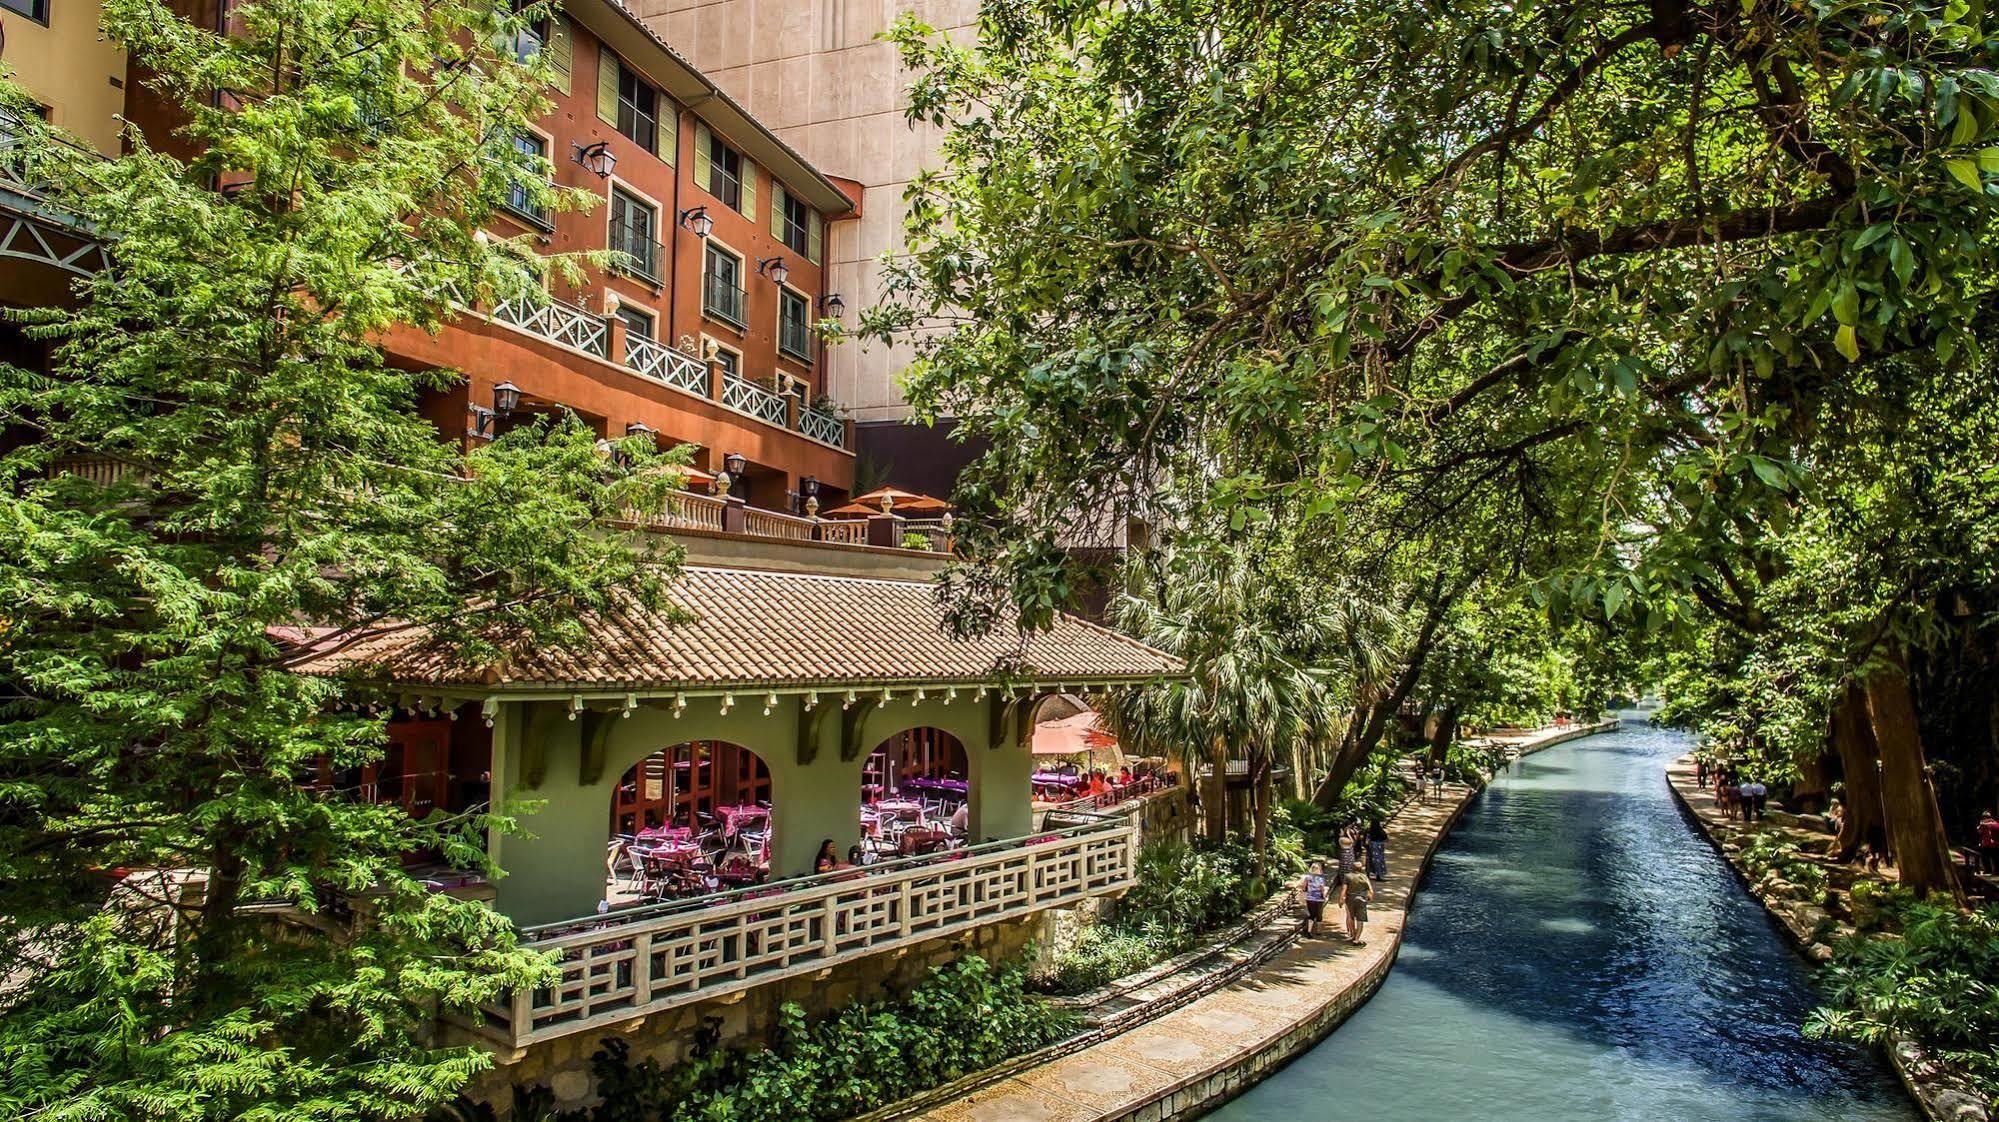  Hotel Valencia Riverwalk  - San Antonio Hotels With Jacuzzi In Room